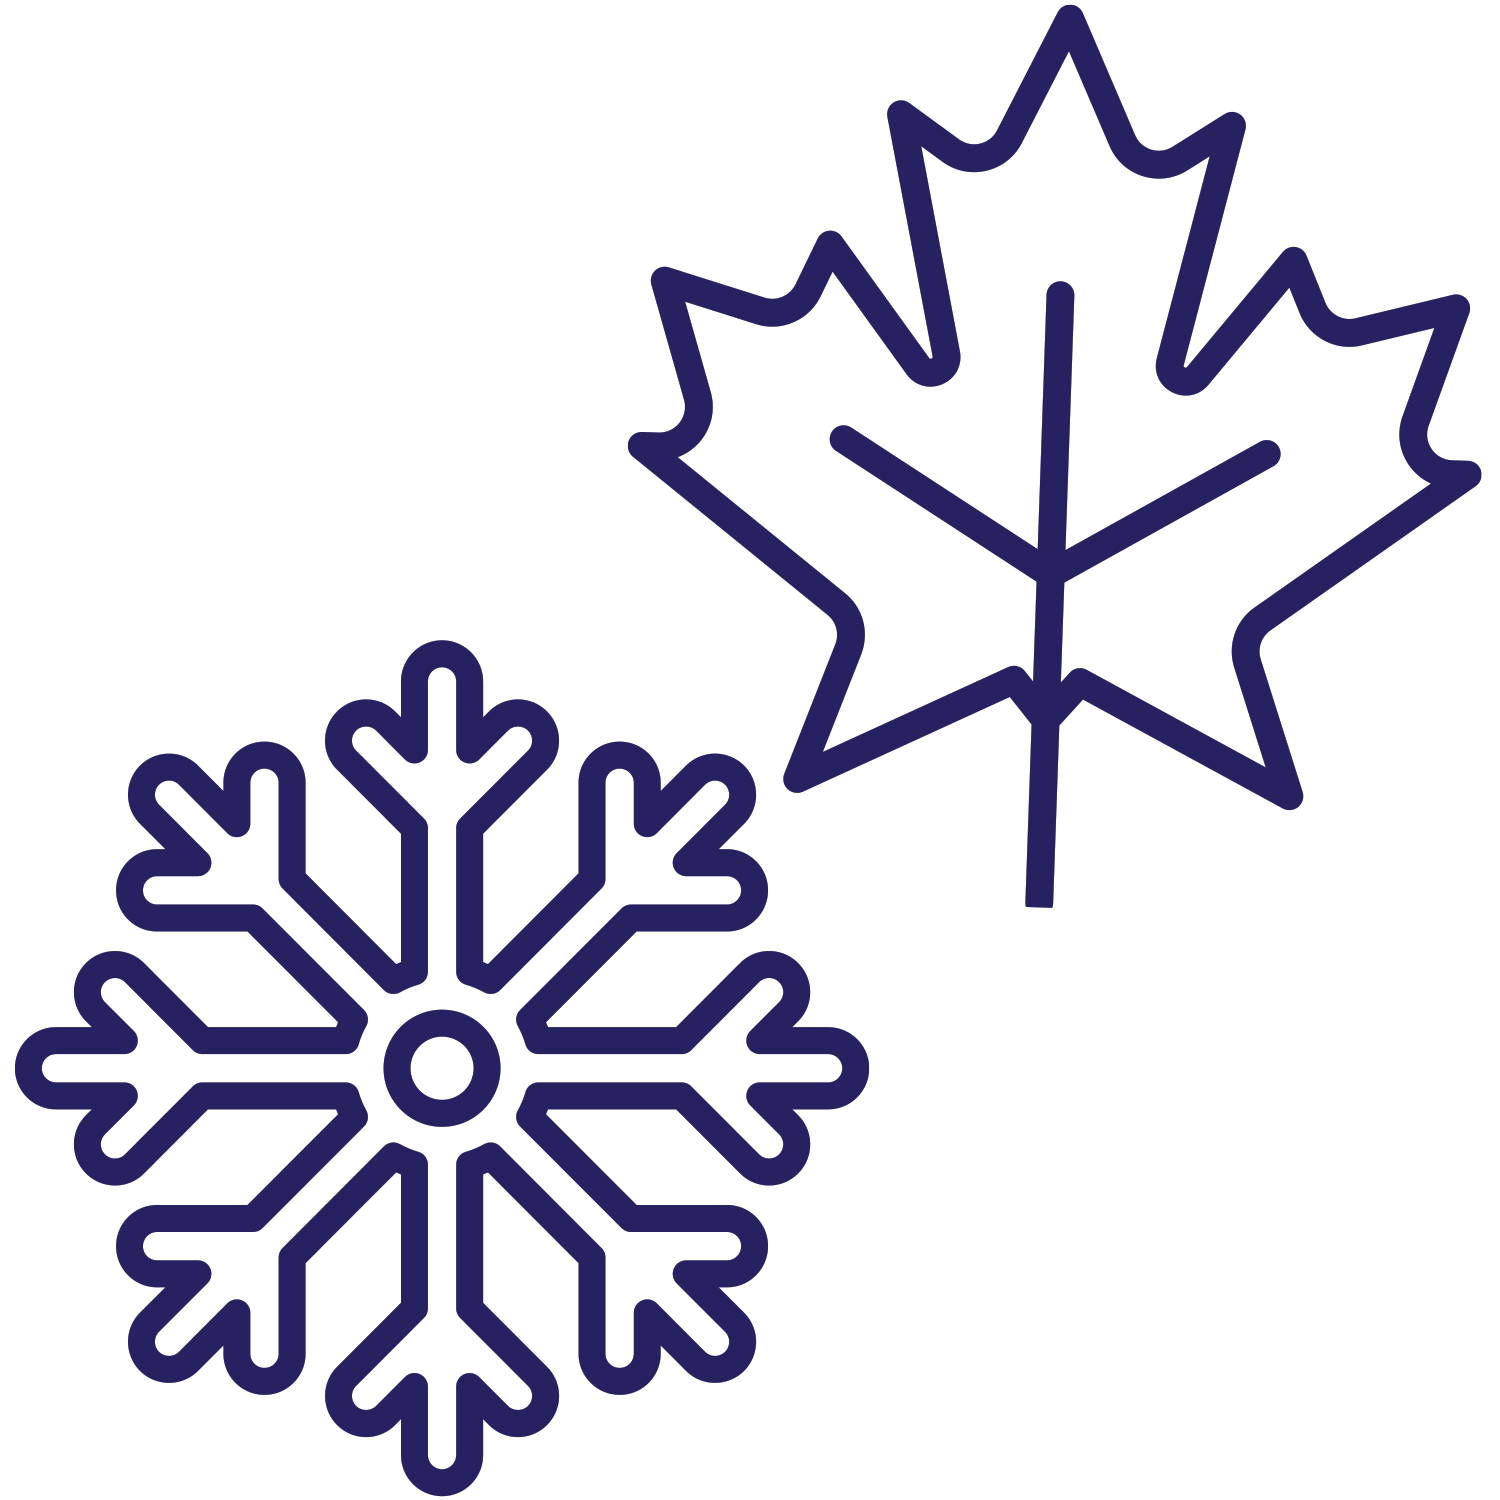 snowflake and fall leaf symbol